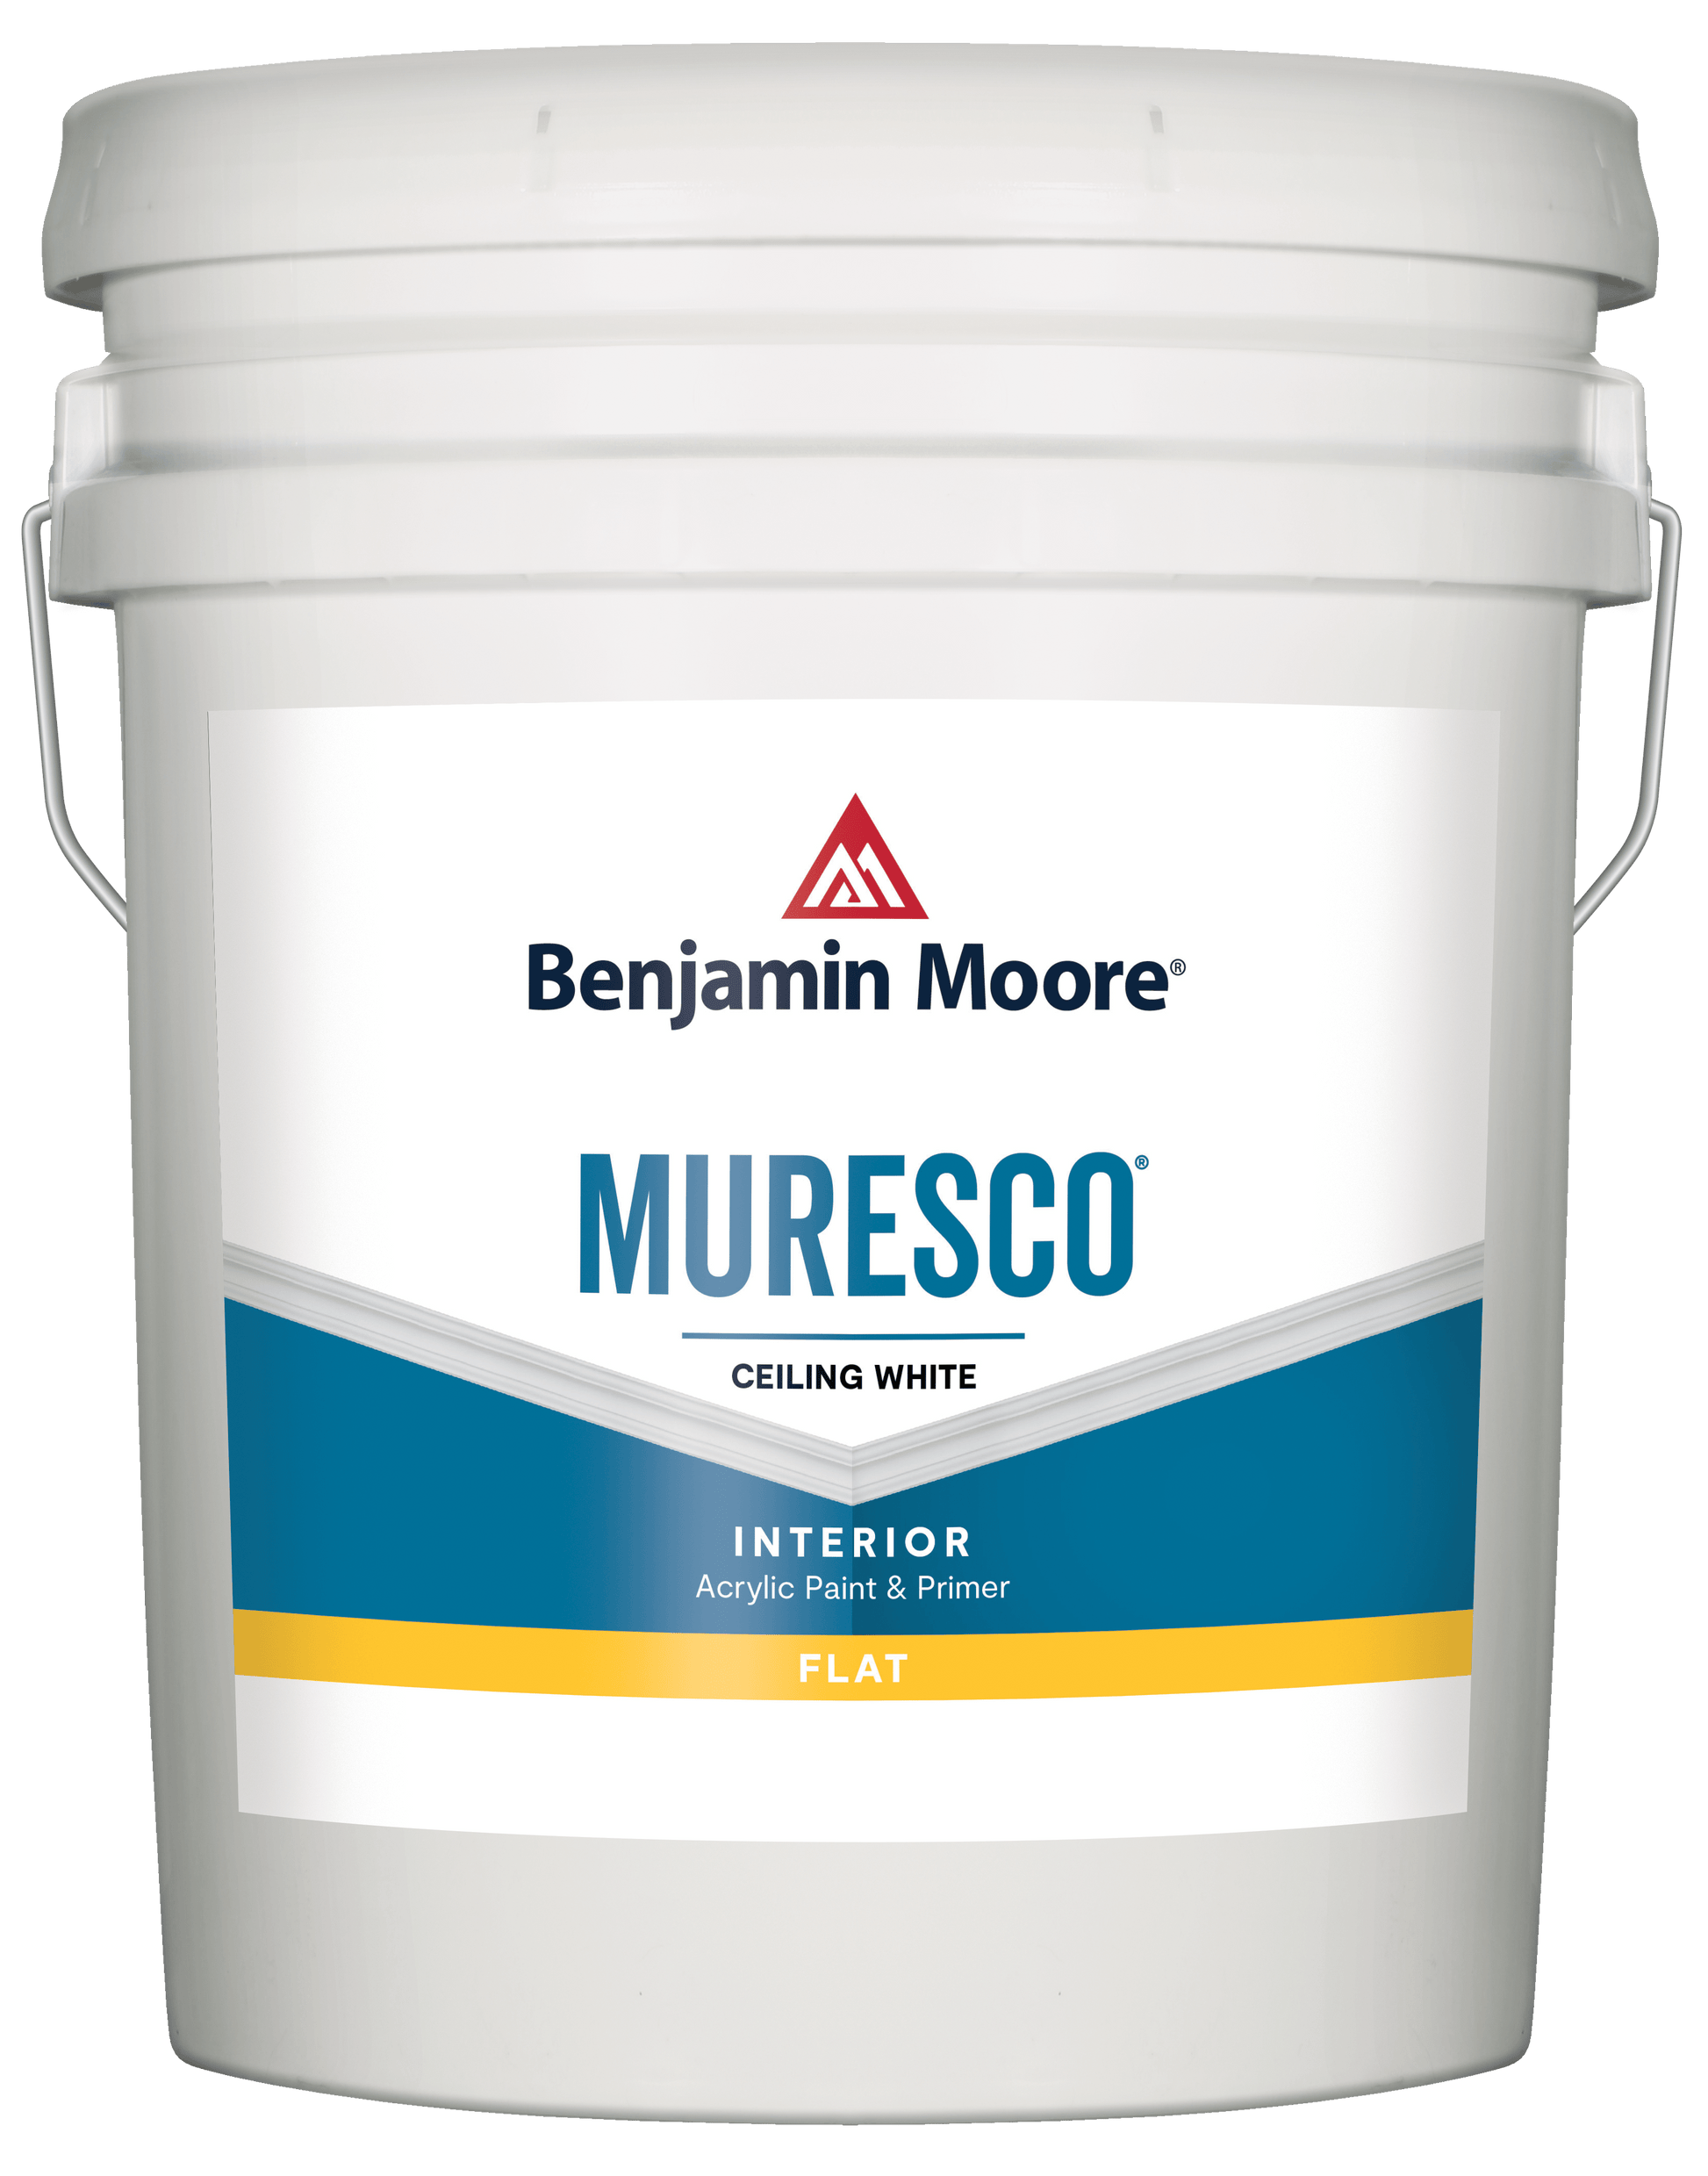 Benjamin Moore Muresco Ceiling Paint - Rossi Paint Stores - Flat - 5 Gallon